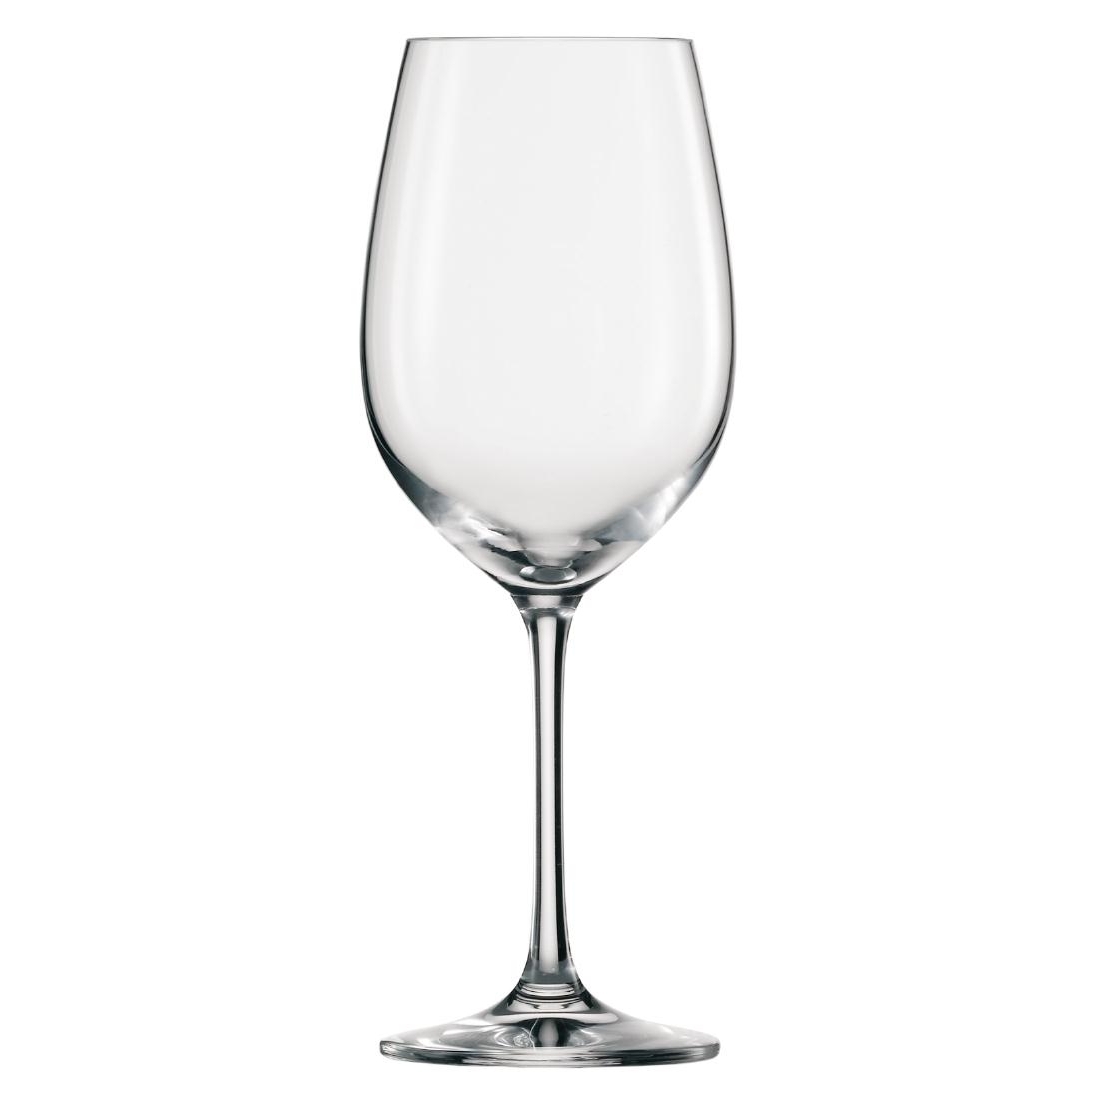 Schott Zwiesel Ivento White Wine glass 340ml GL136 - Pack of 6 